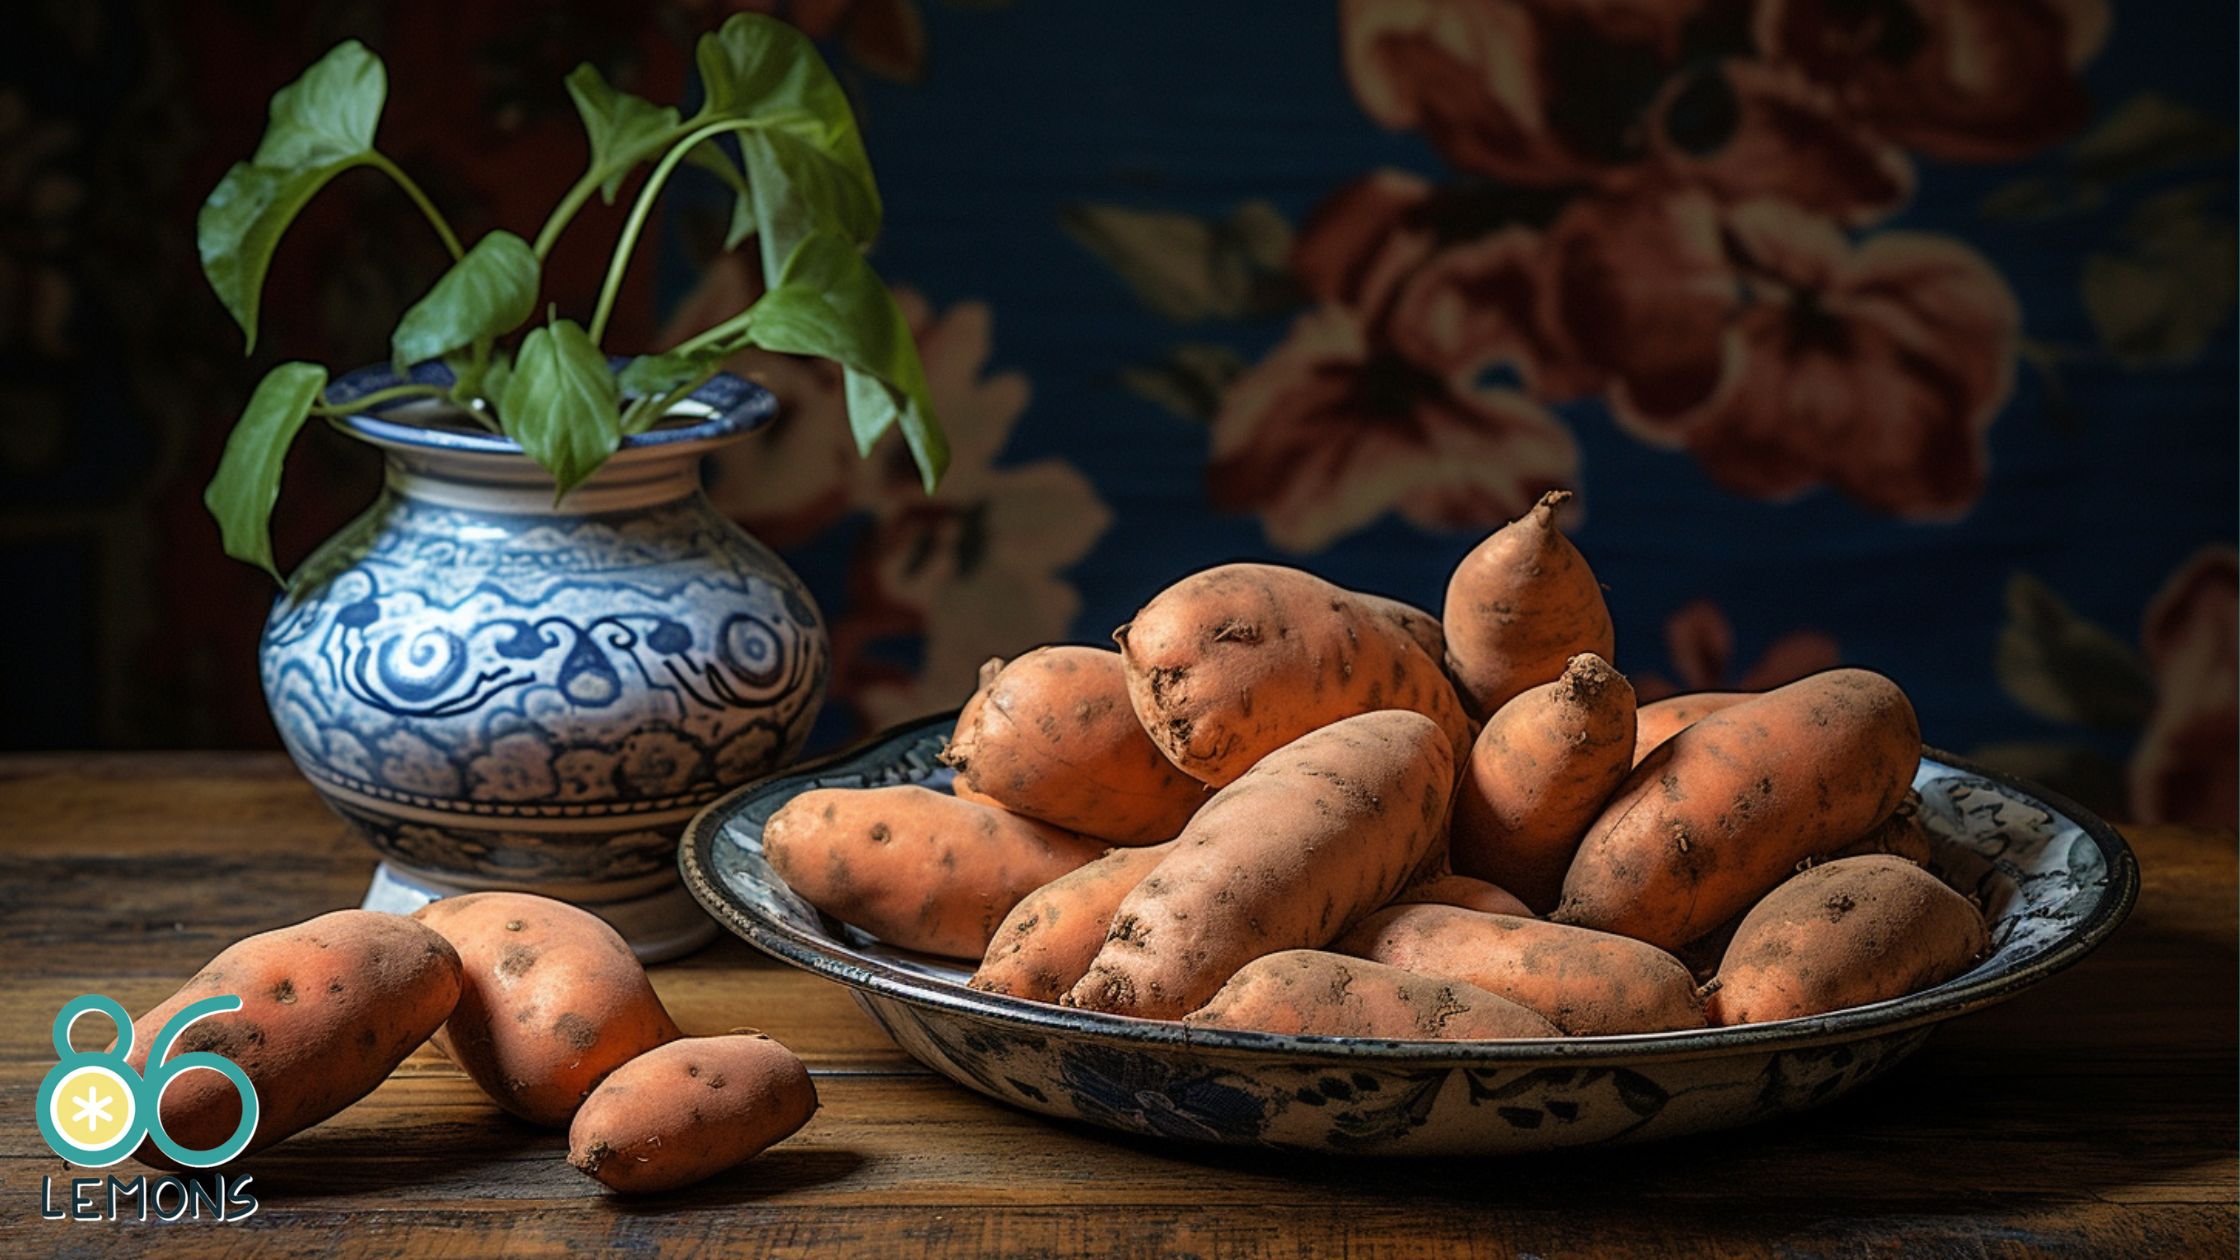 https://86lemons.com/wp-content/uploads/2023/12/sweet-potatoes-in-a-bowl.jpg